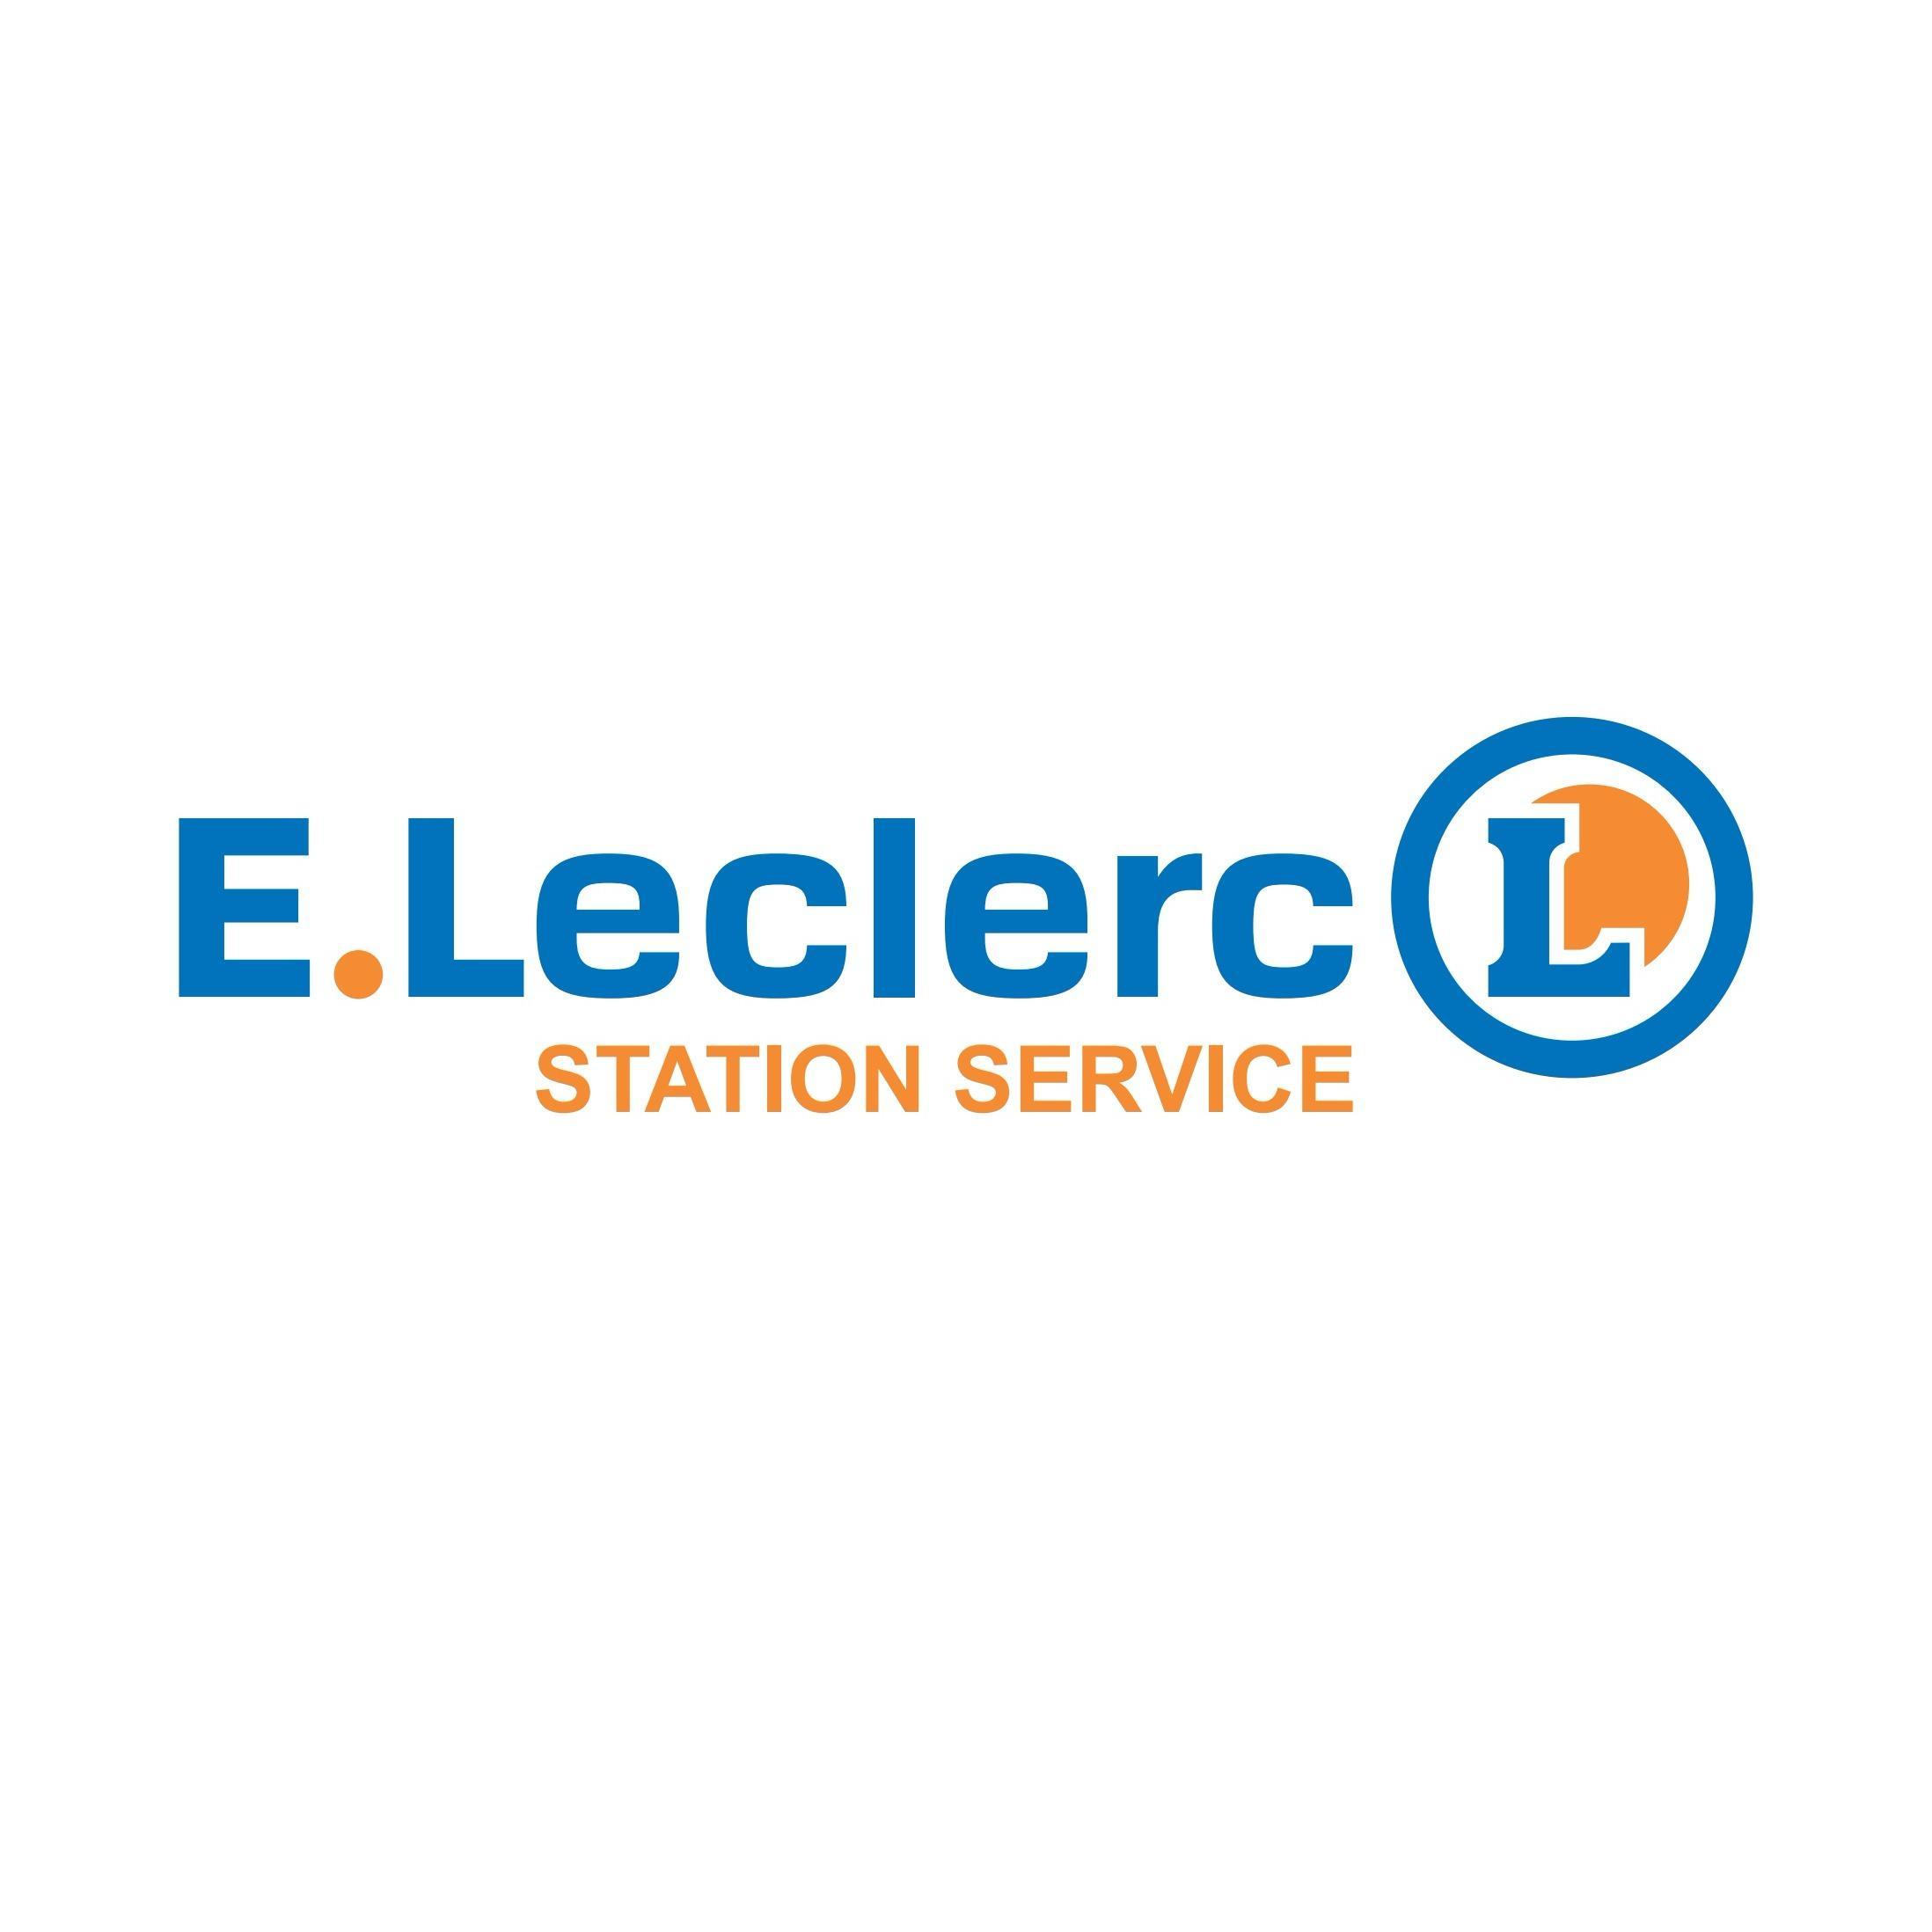 E.leclerc Station Service Grasse